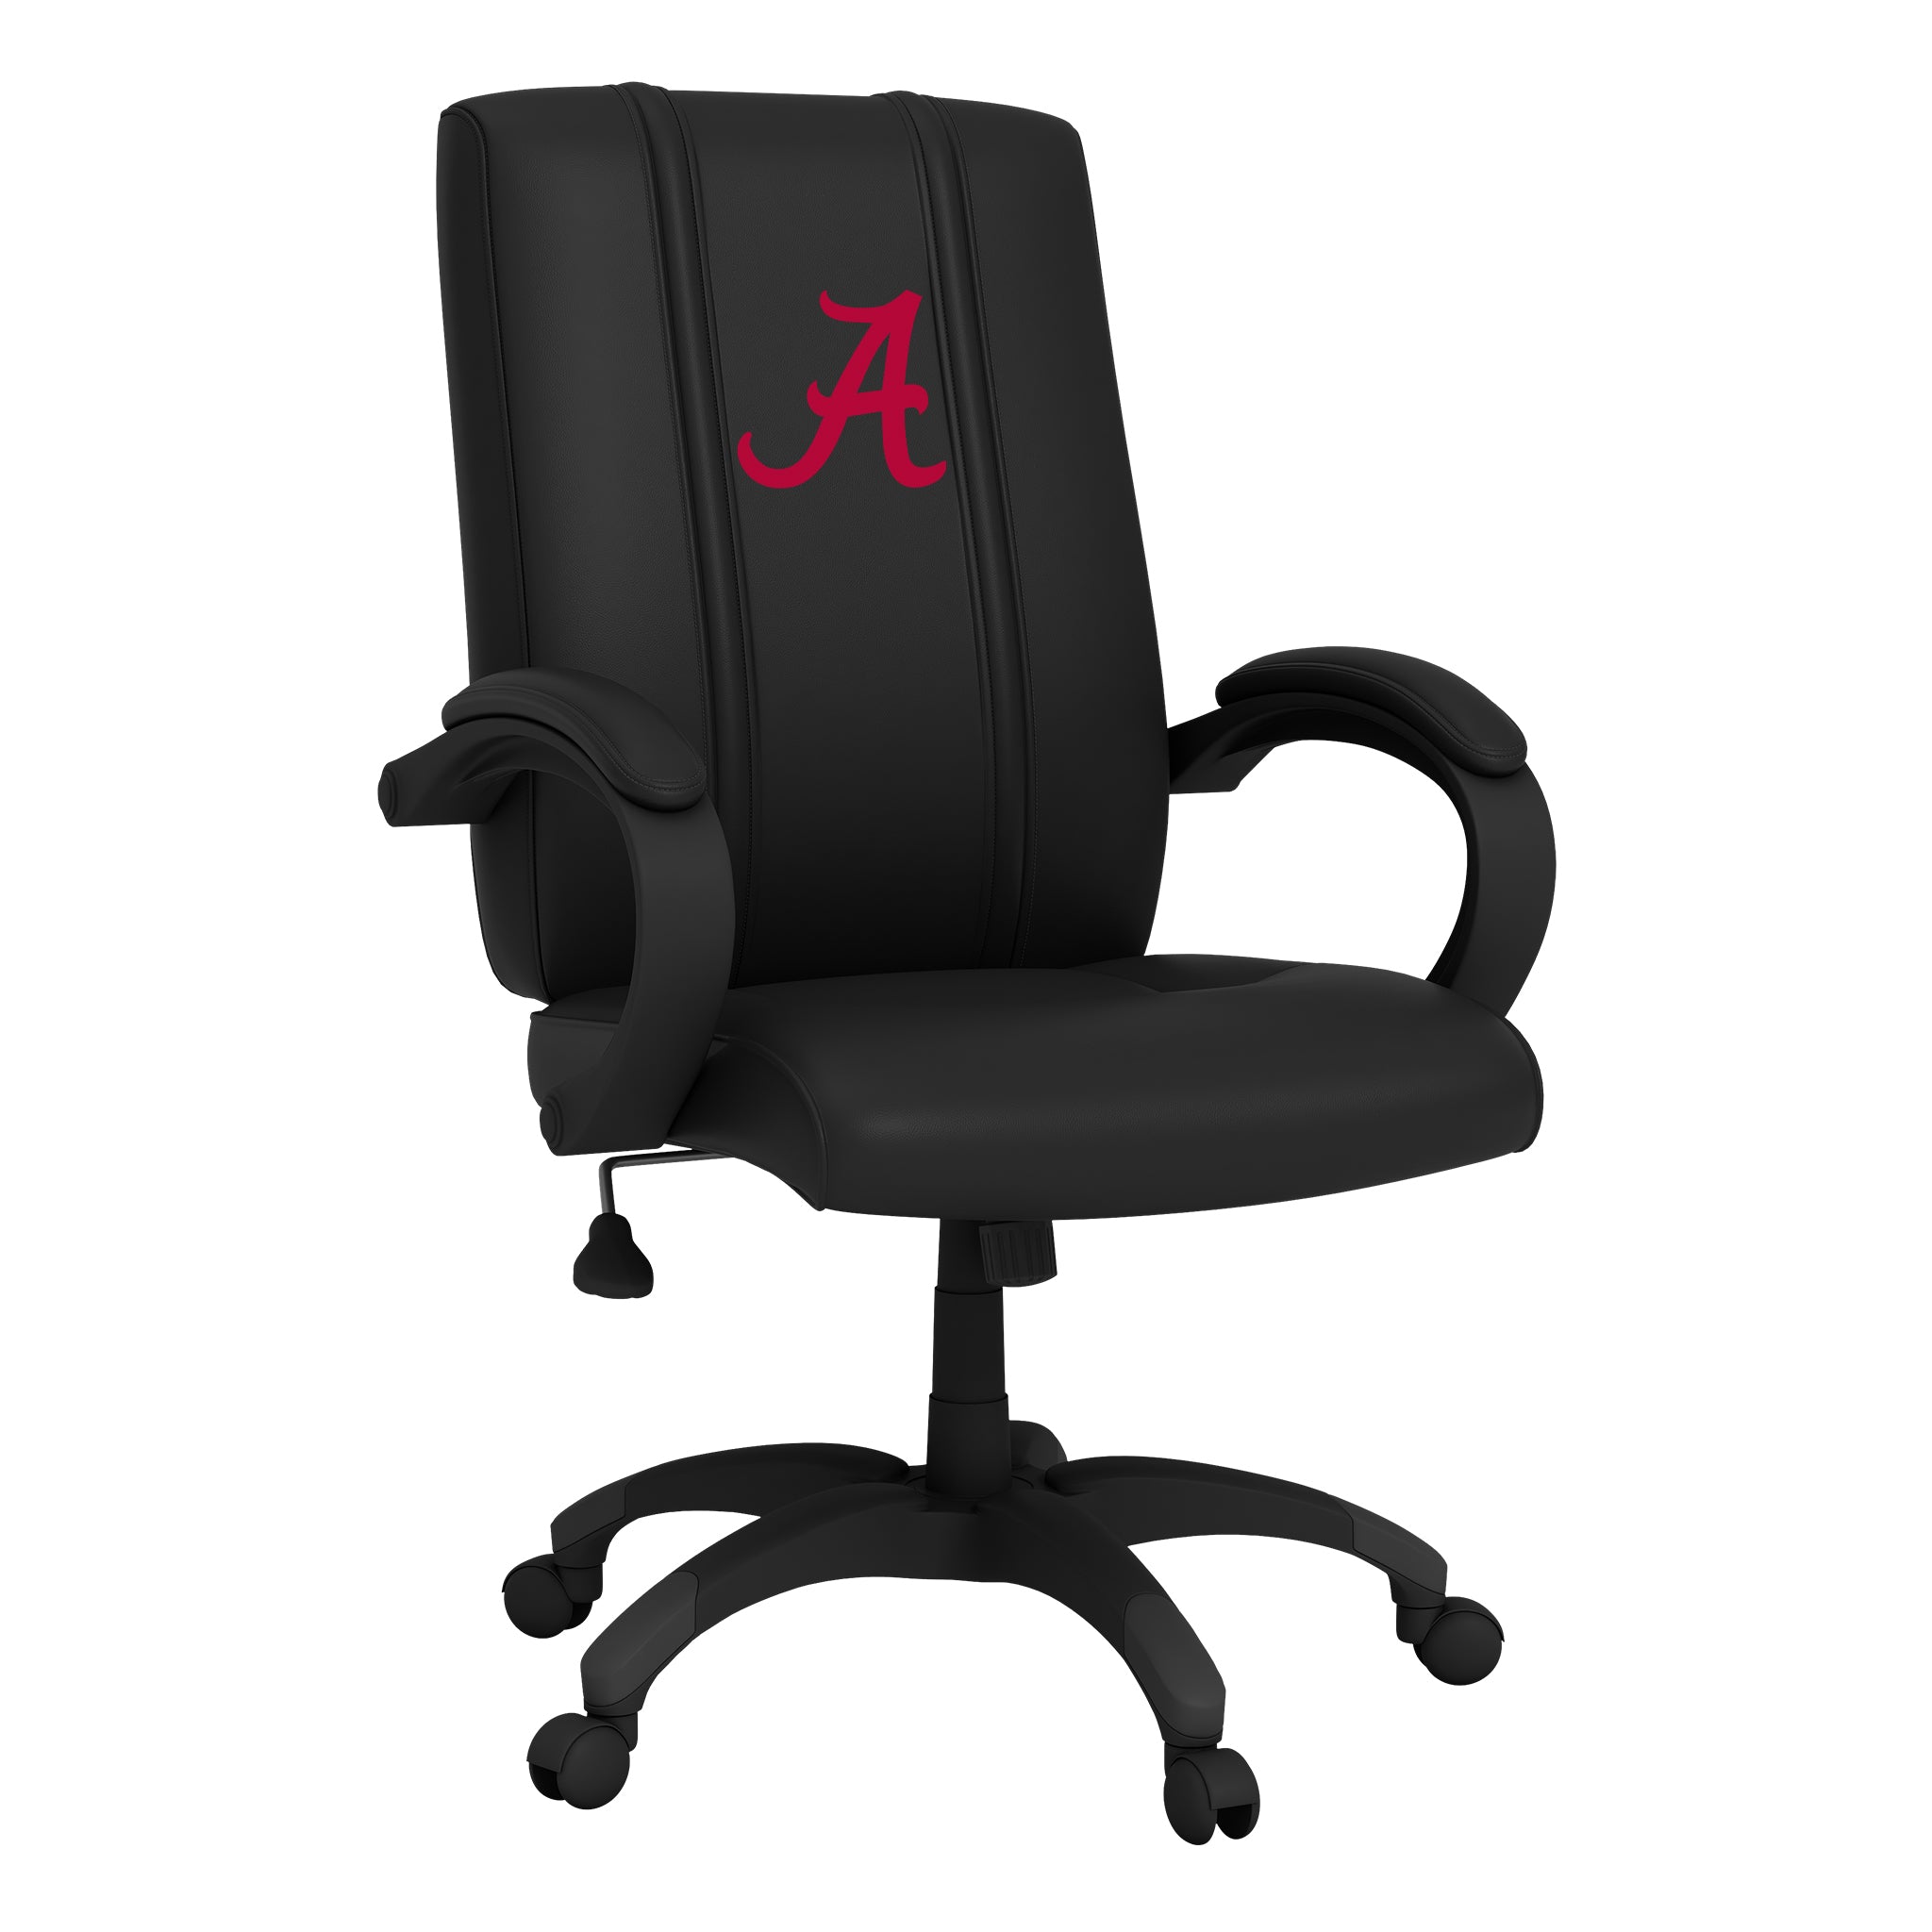 Alabama Crimson Tide Office Chair 1000 with Alabama Crimson Tide Red A Logo